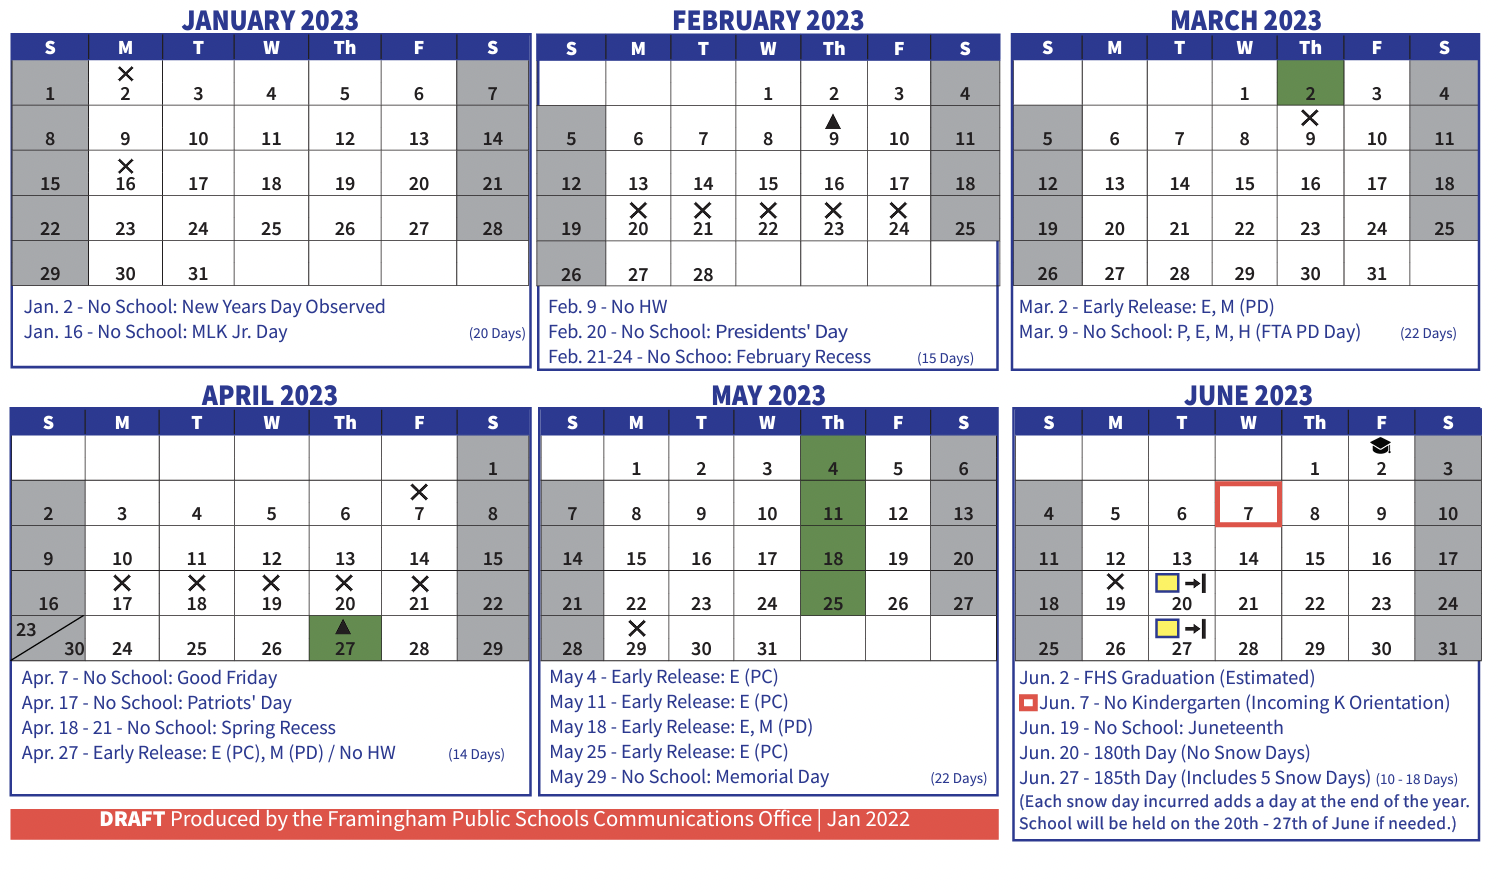 first-look-at-the-proposed-framingham-2022-23-school-calendar-framingham-source